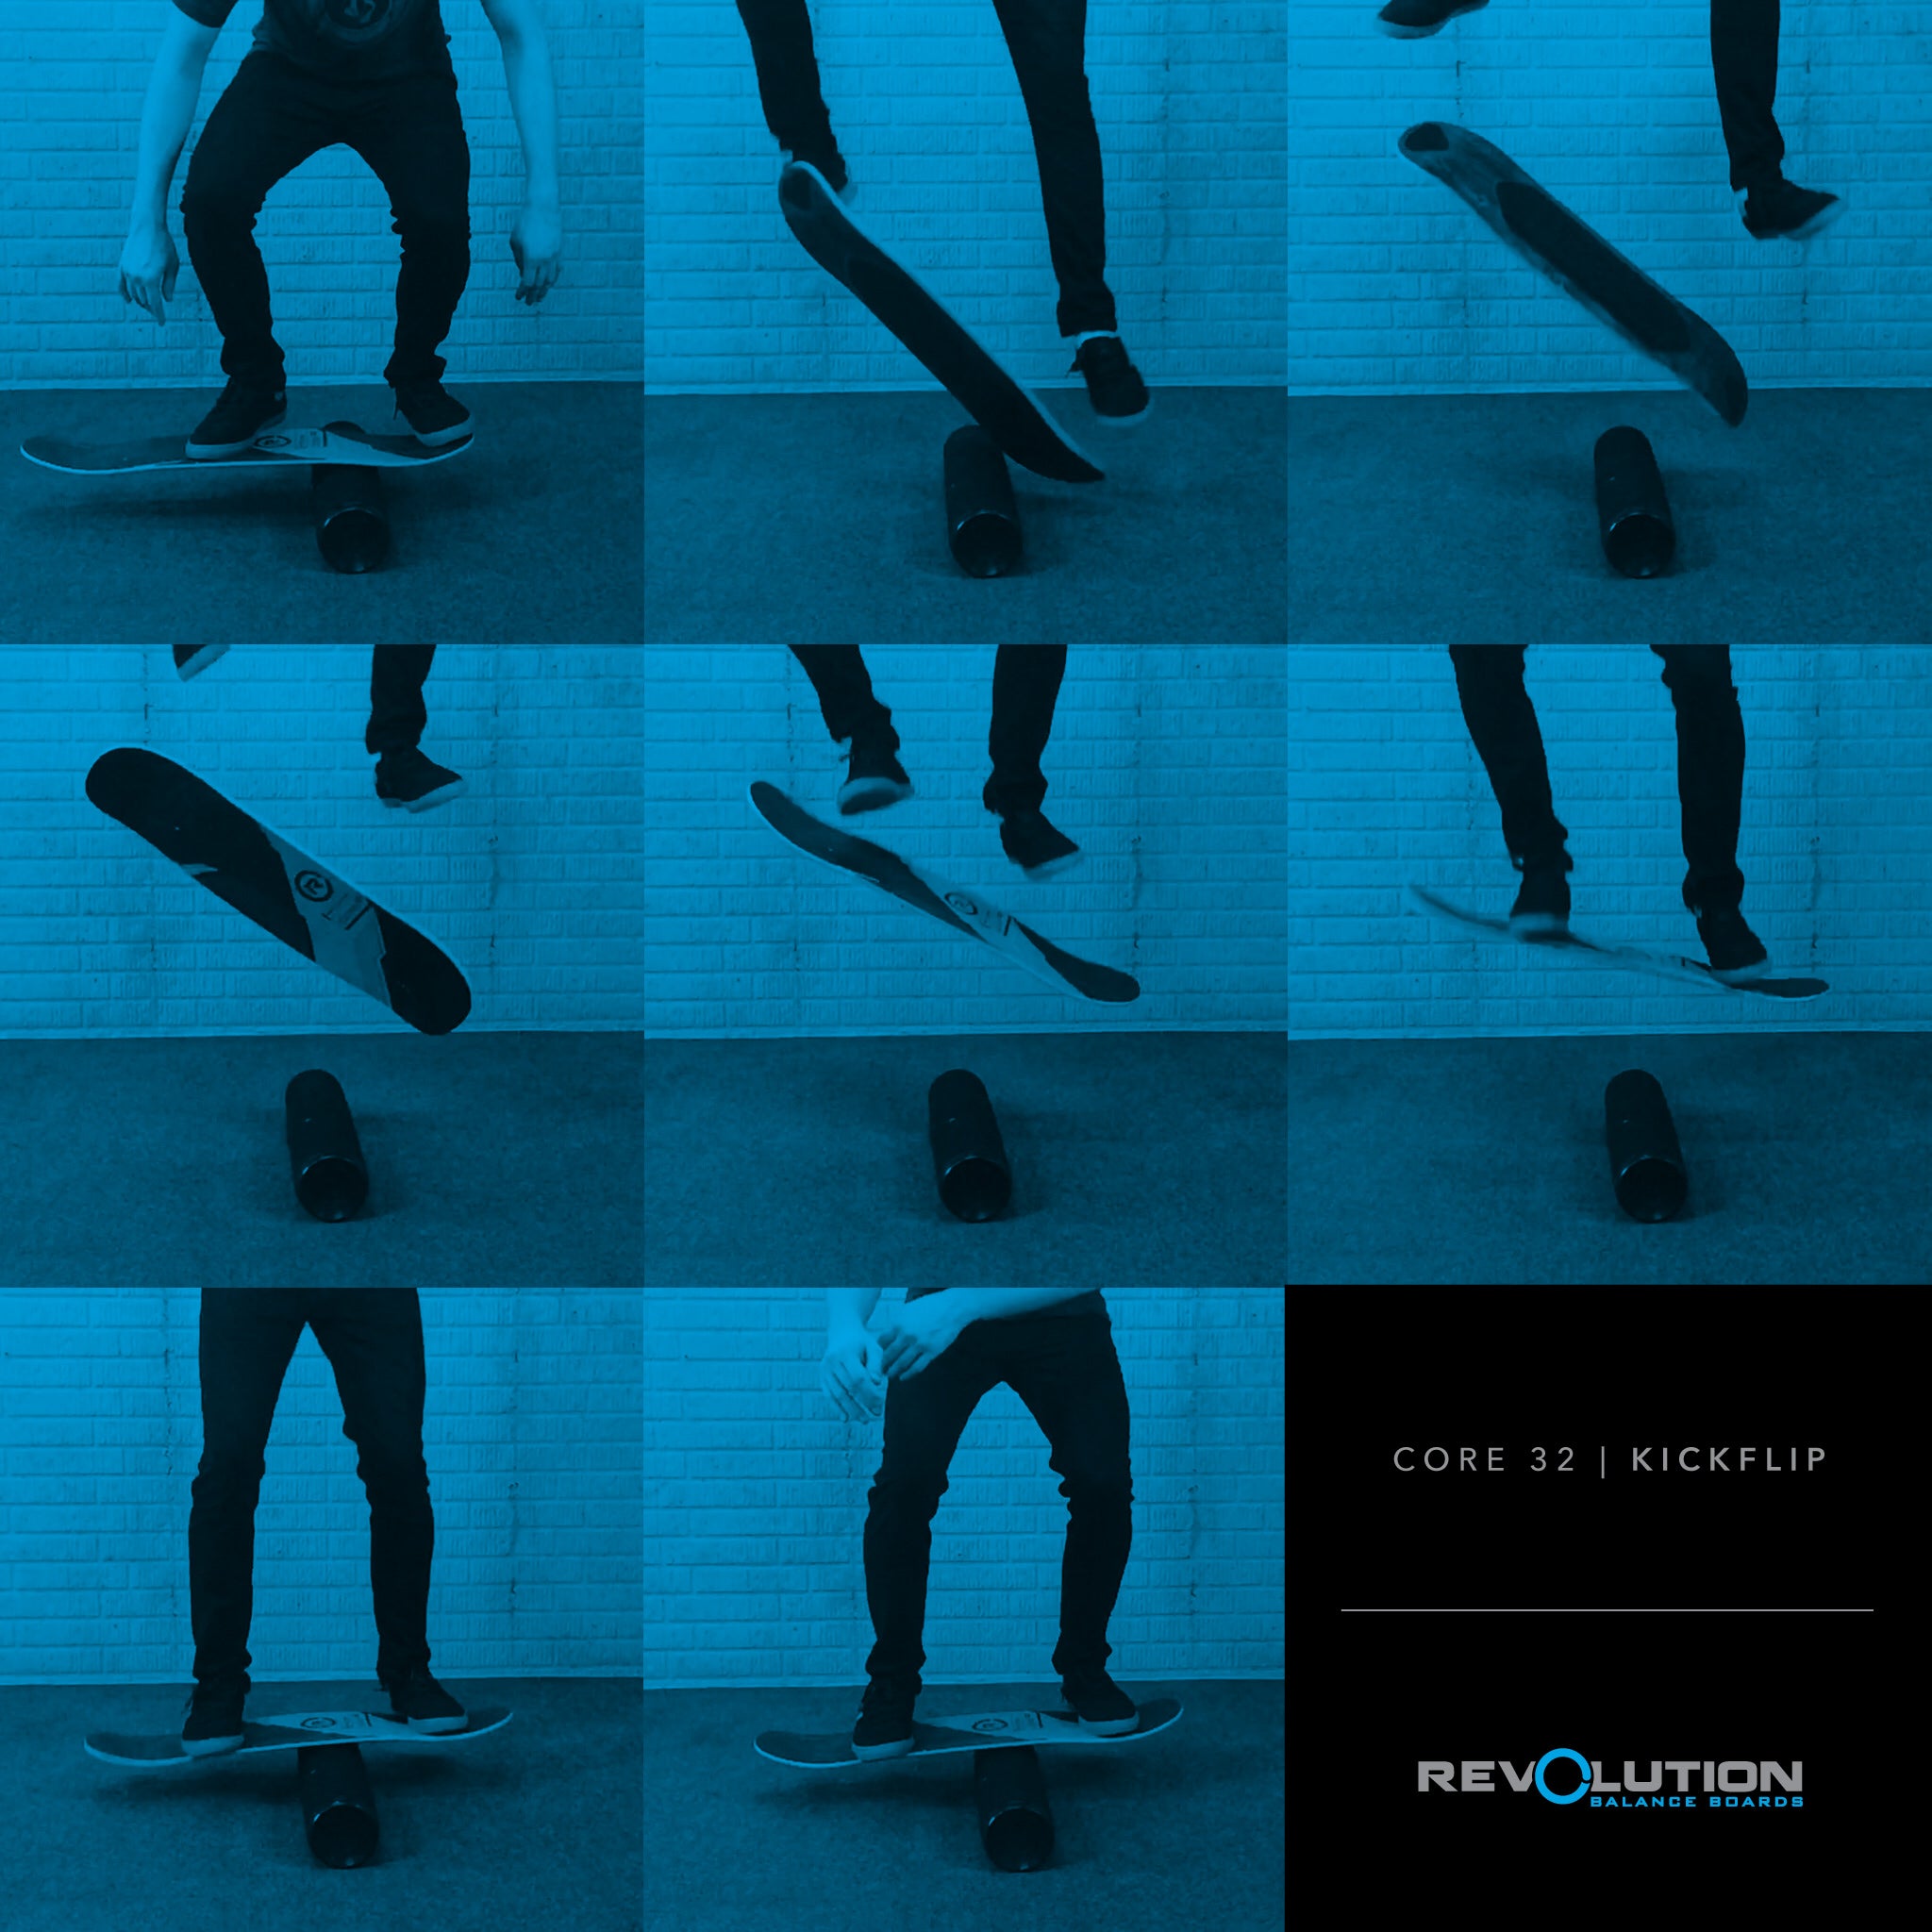 A skateboarder showcasing impressive tricks and progressing in their Revolution Core 32 Balance Board skills.